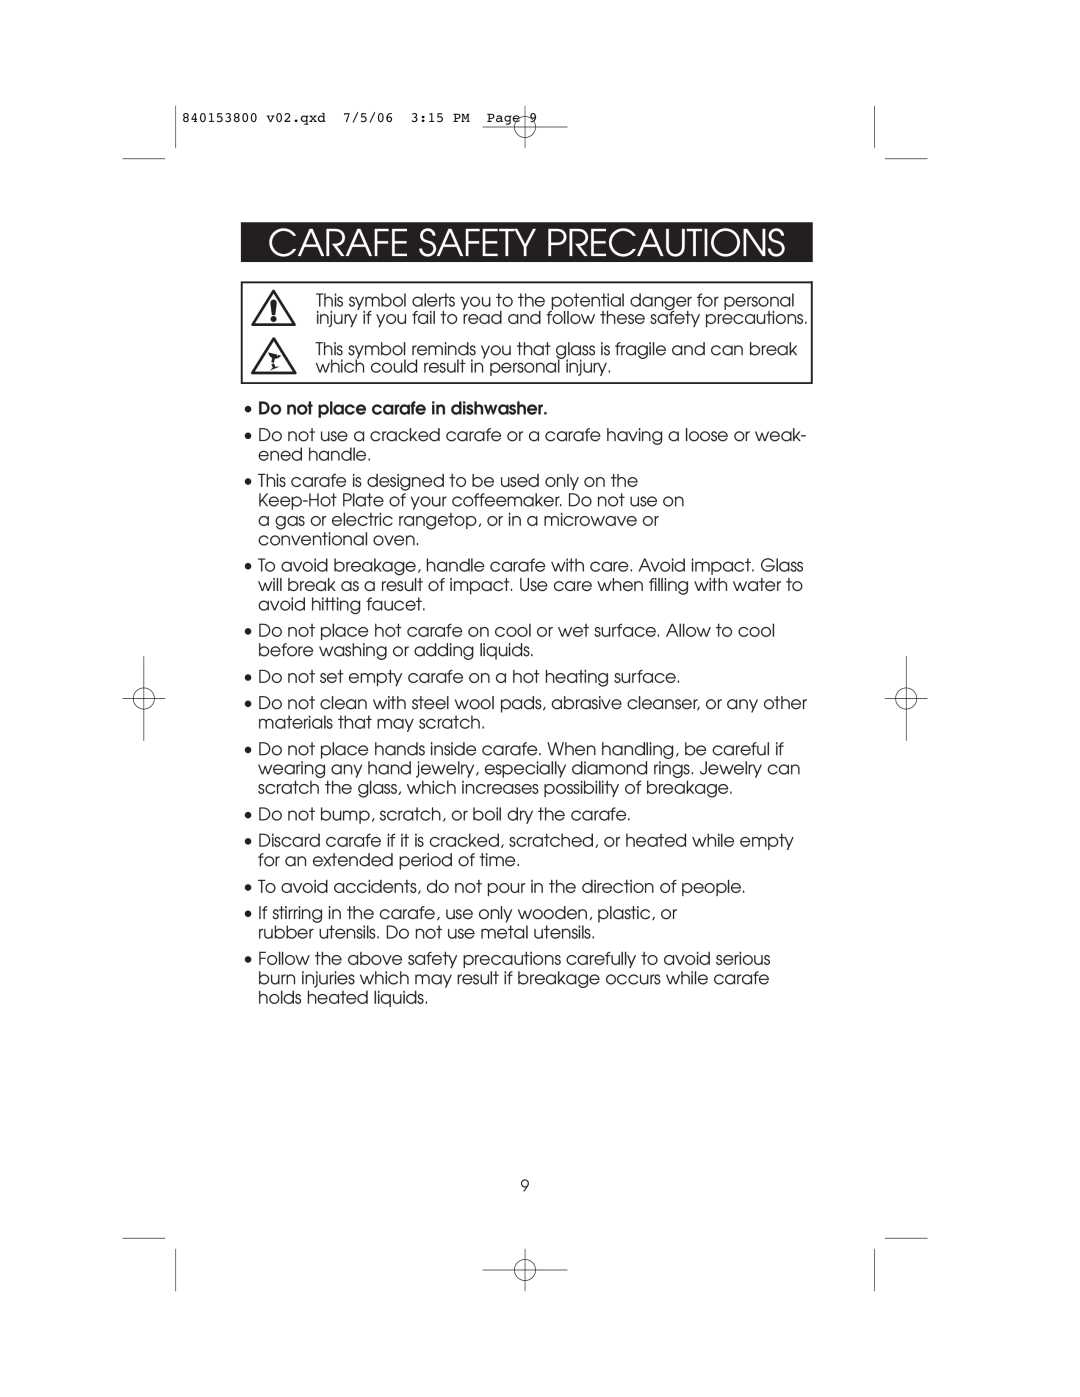 Hamilton Beach 840153800 owner manual Carafe Safety Precautions 